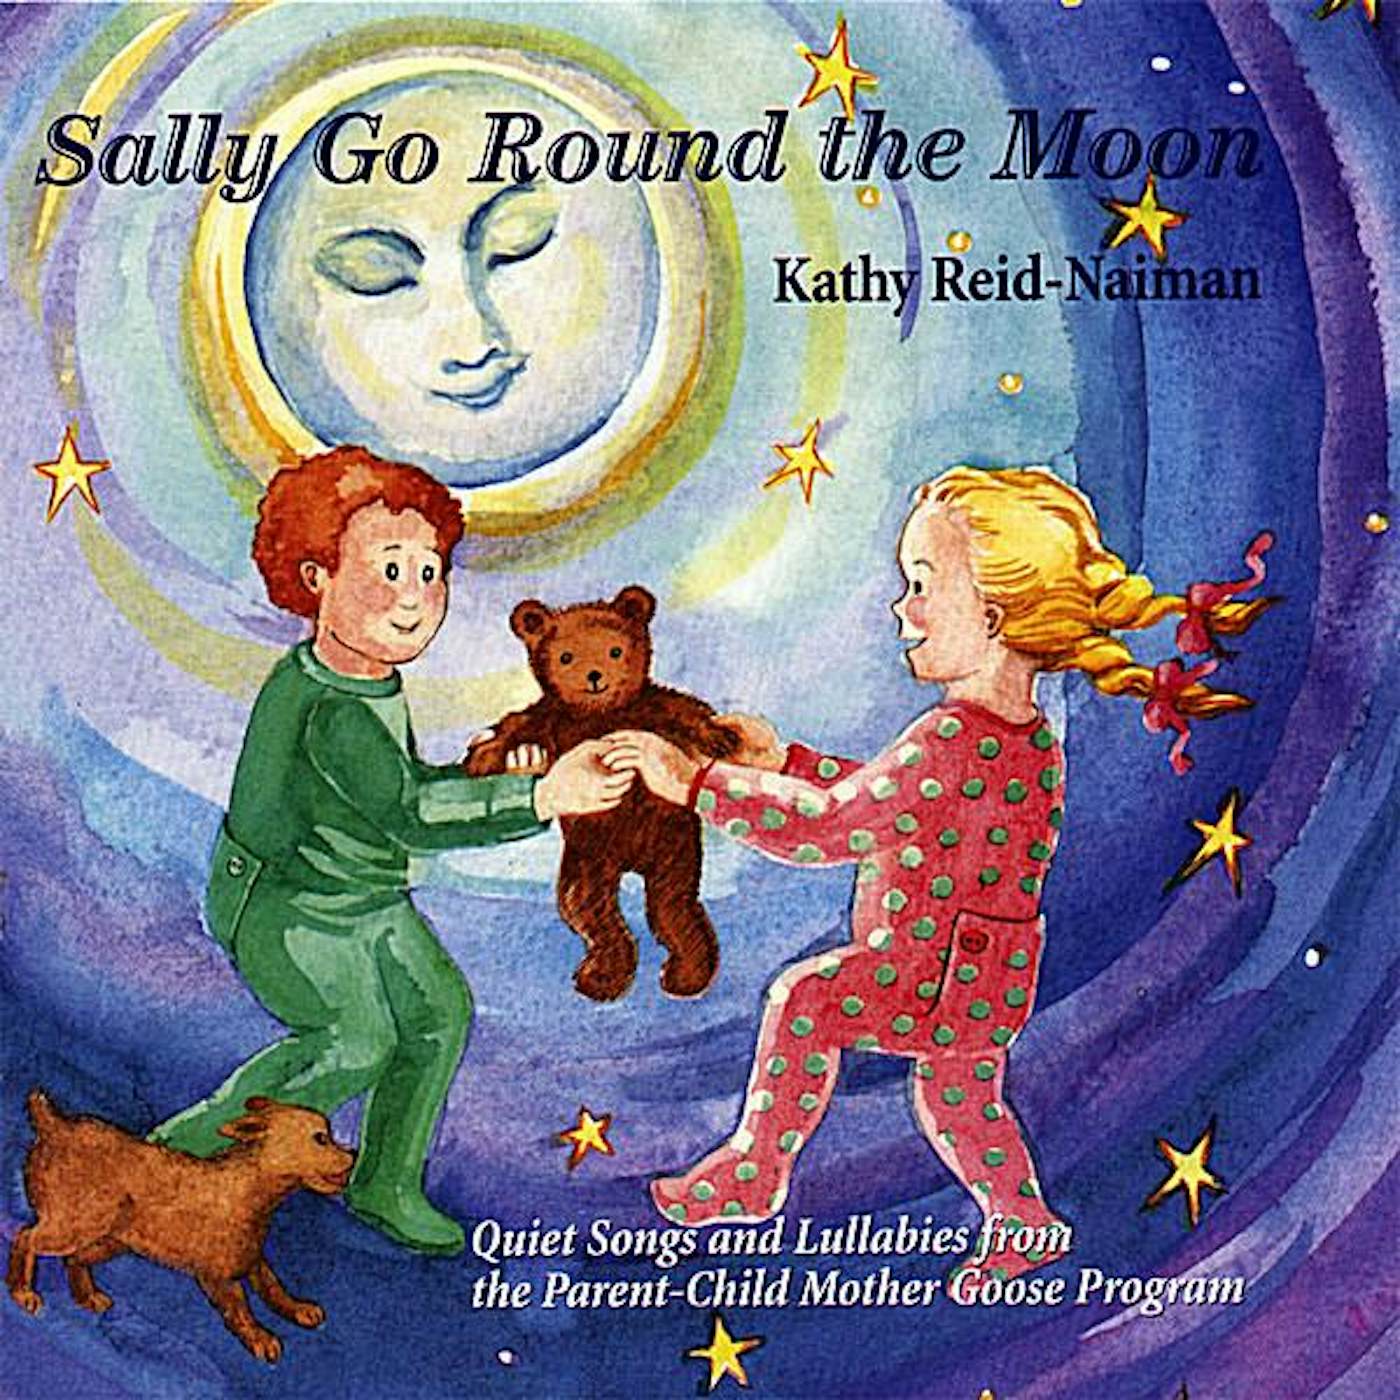 Kathy Reid-Naiman SALLY GO ROUND THE MOON CD